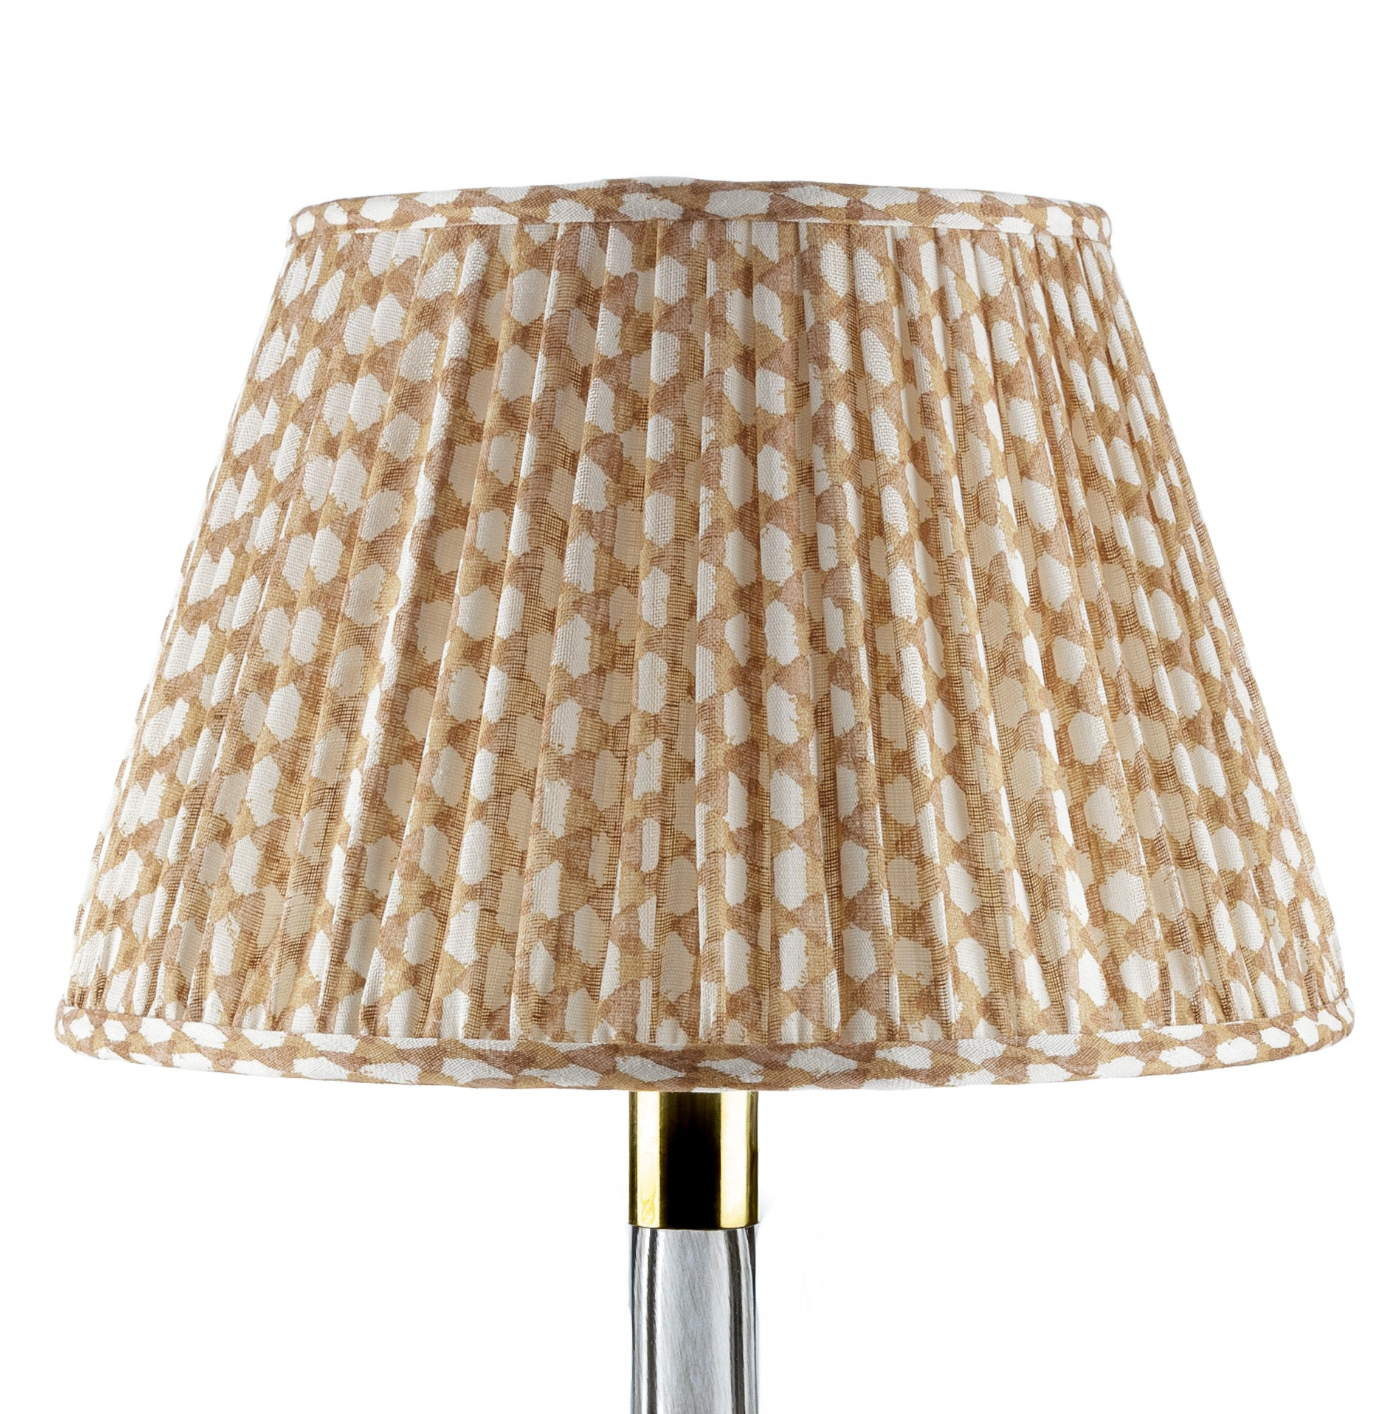 20" Fermoie Lampshade in Nut Brown Wicker | Newport Lamp And Shade | Located in Newport, RI